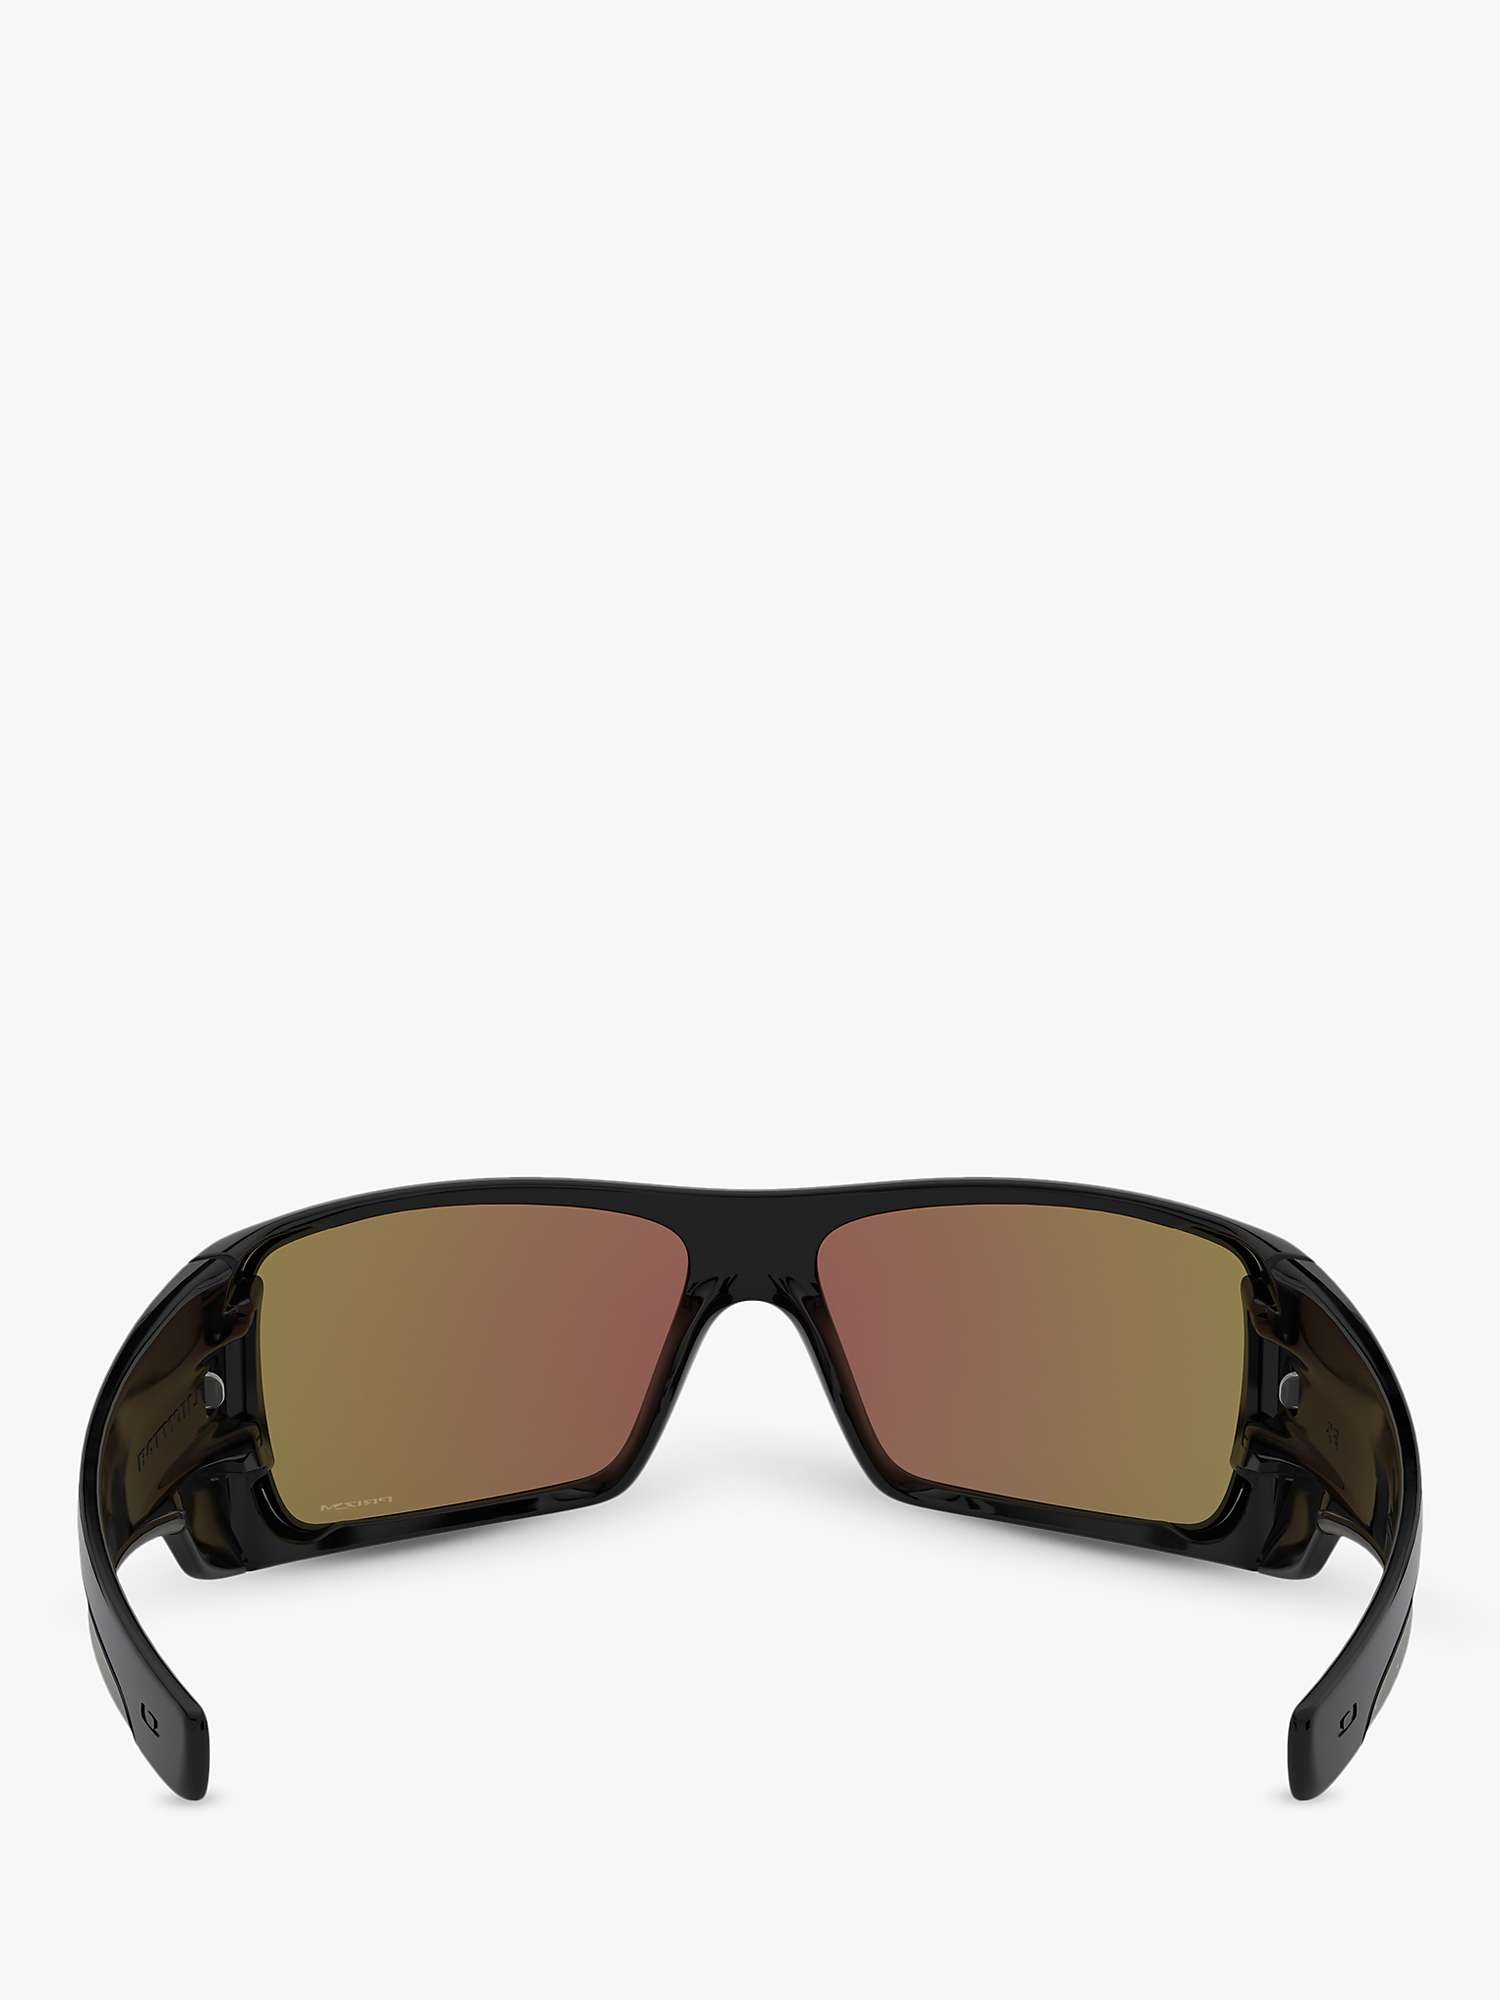 Buy Oakley OO9101 Men's Batwolf Prizm Rectangular Sunglasses, Black Ink/Grey Online at johnlewis.com